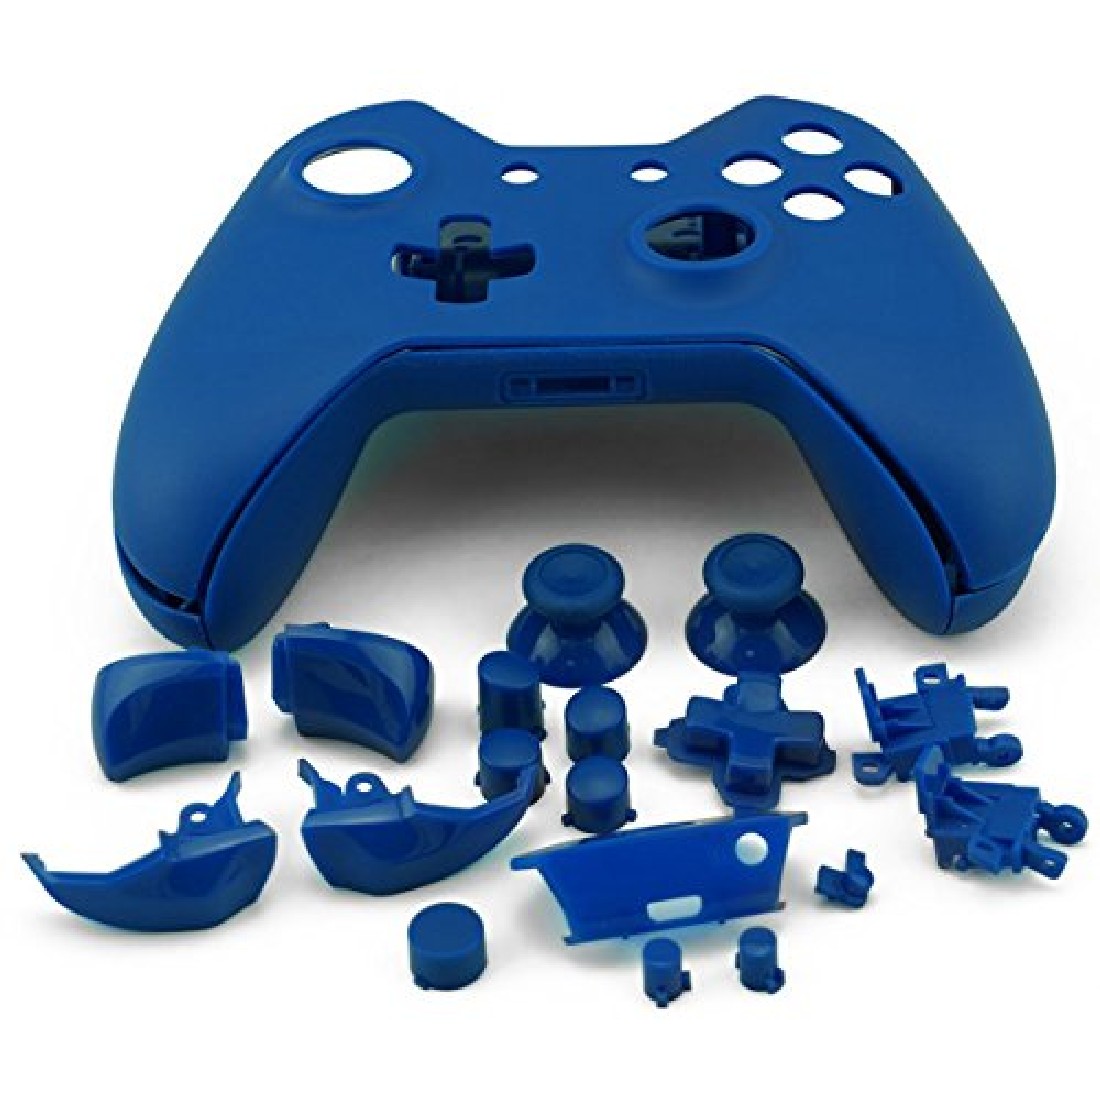 xbox one controller wireless blue